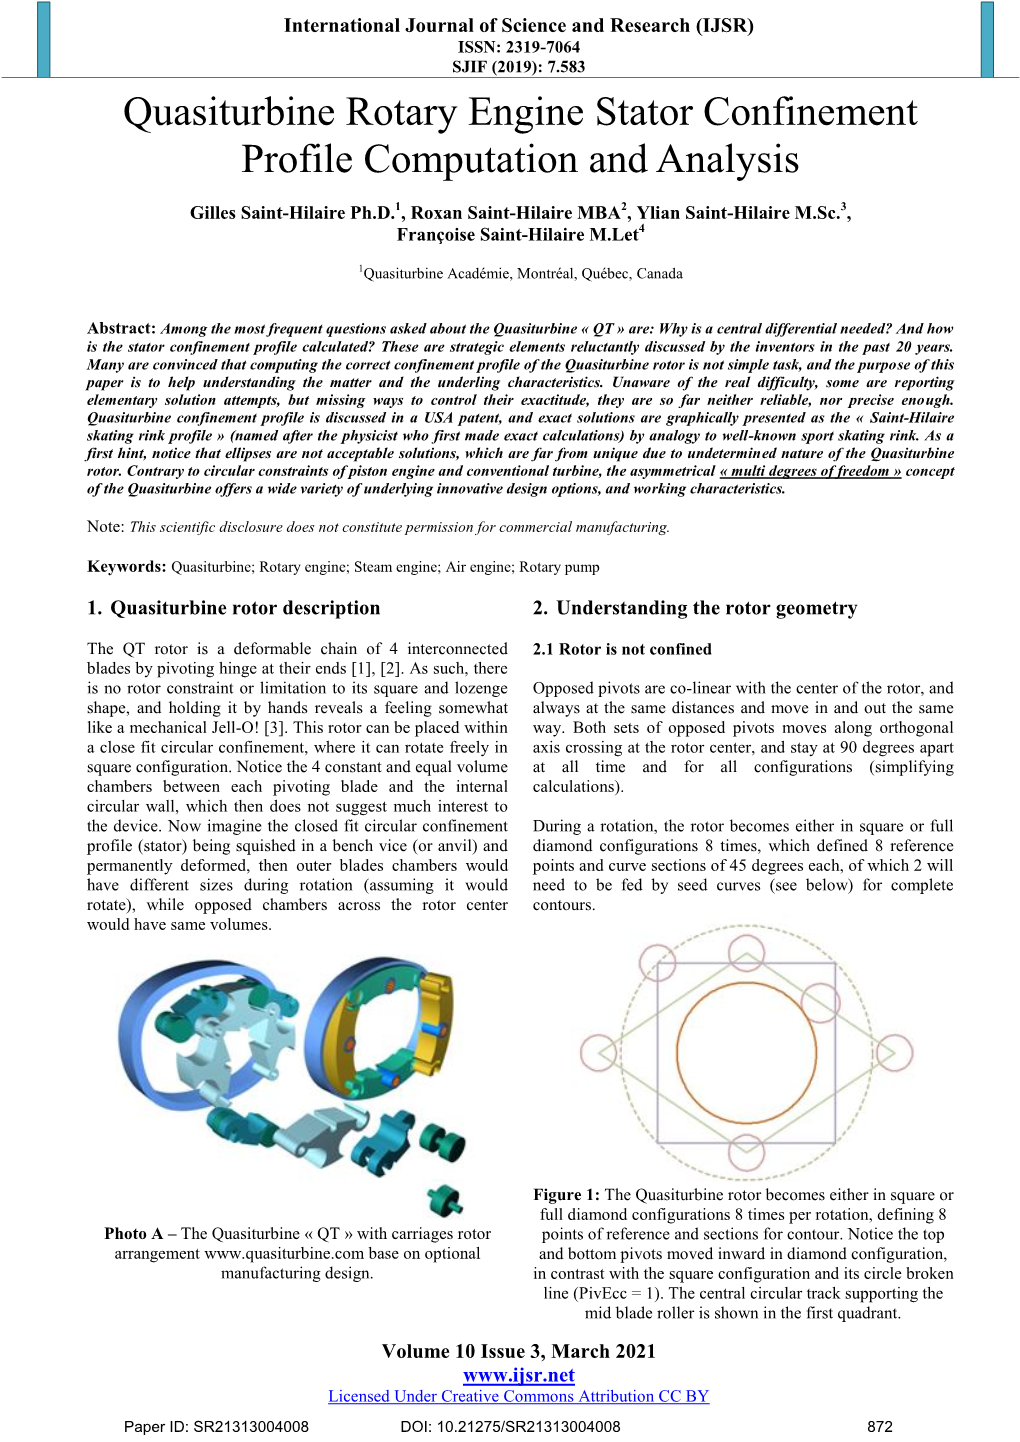 Quasiturbine Rotary Engine Stator Confinement Profile Computation and Analysis